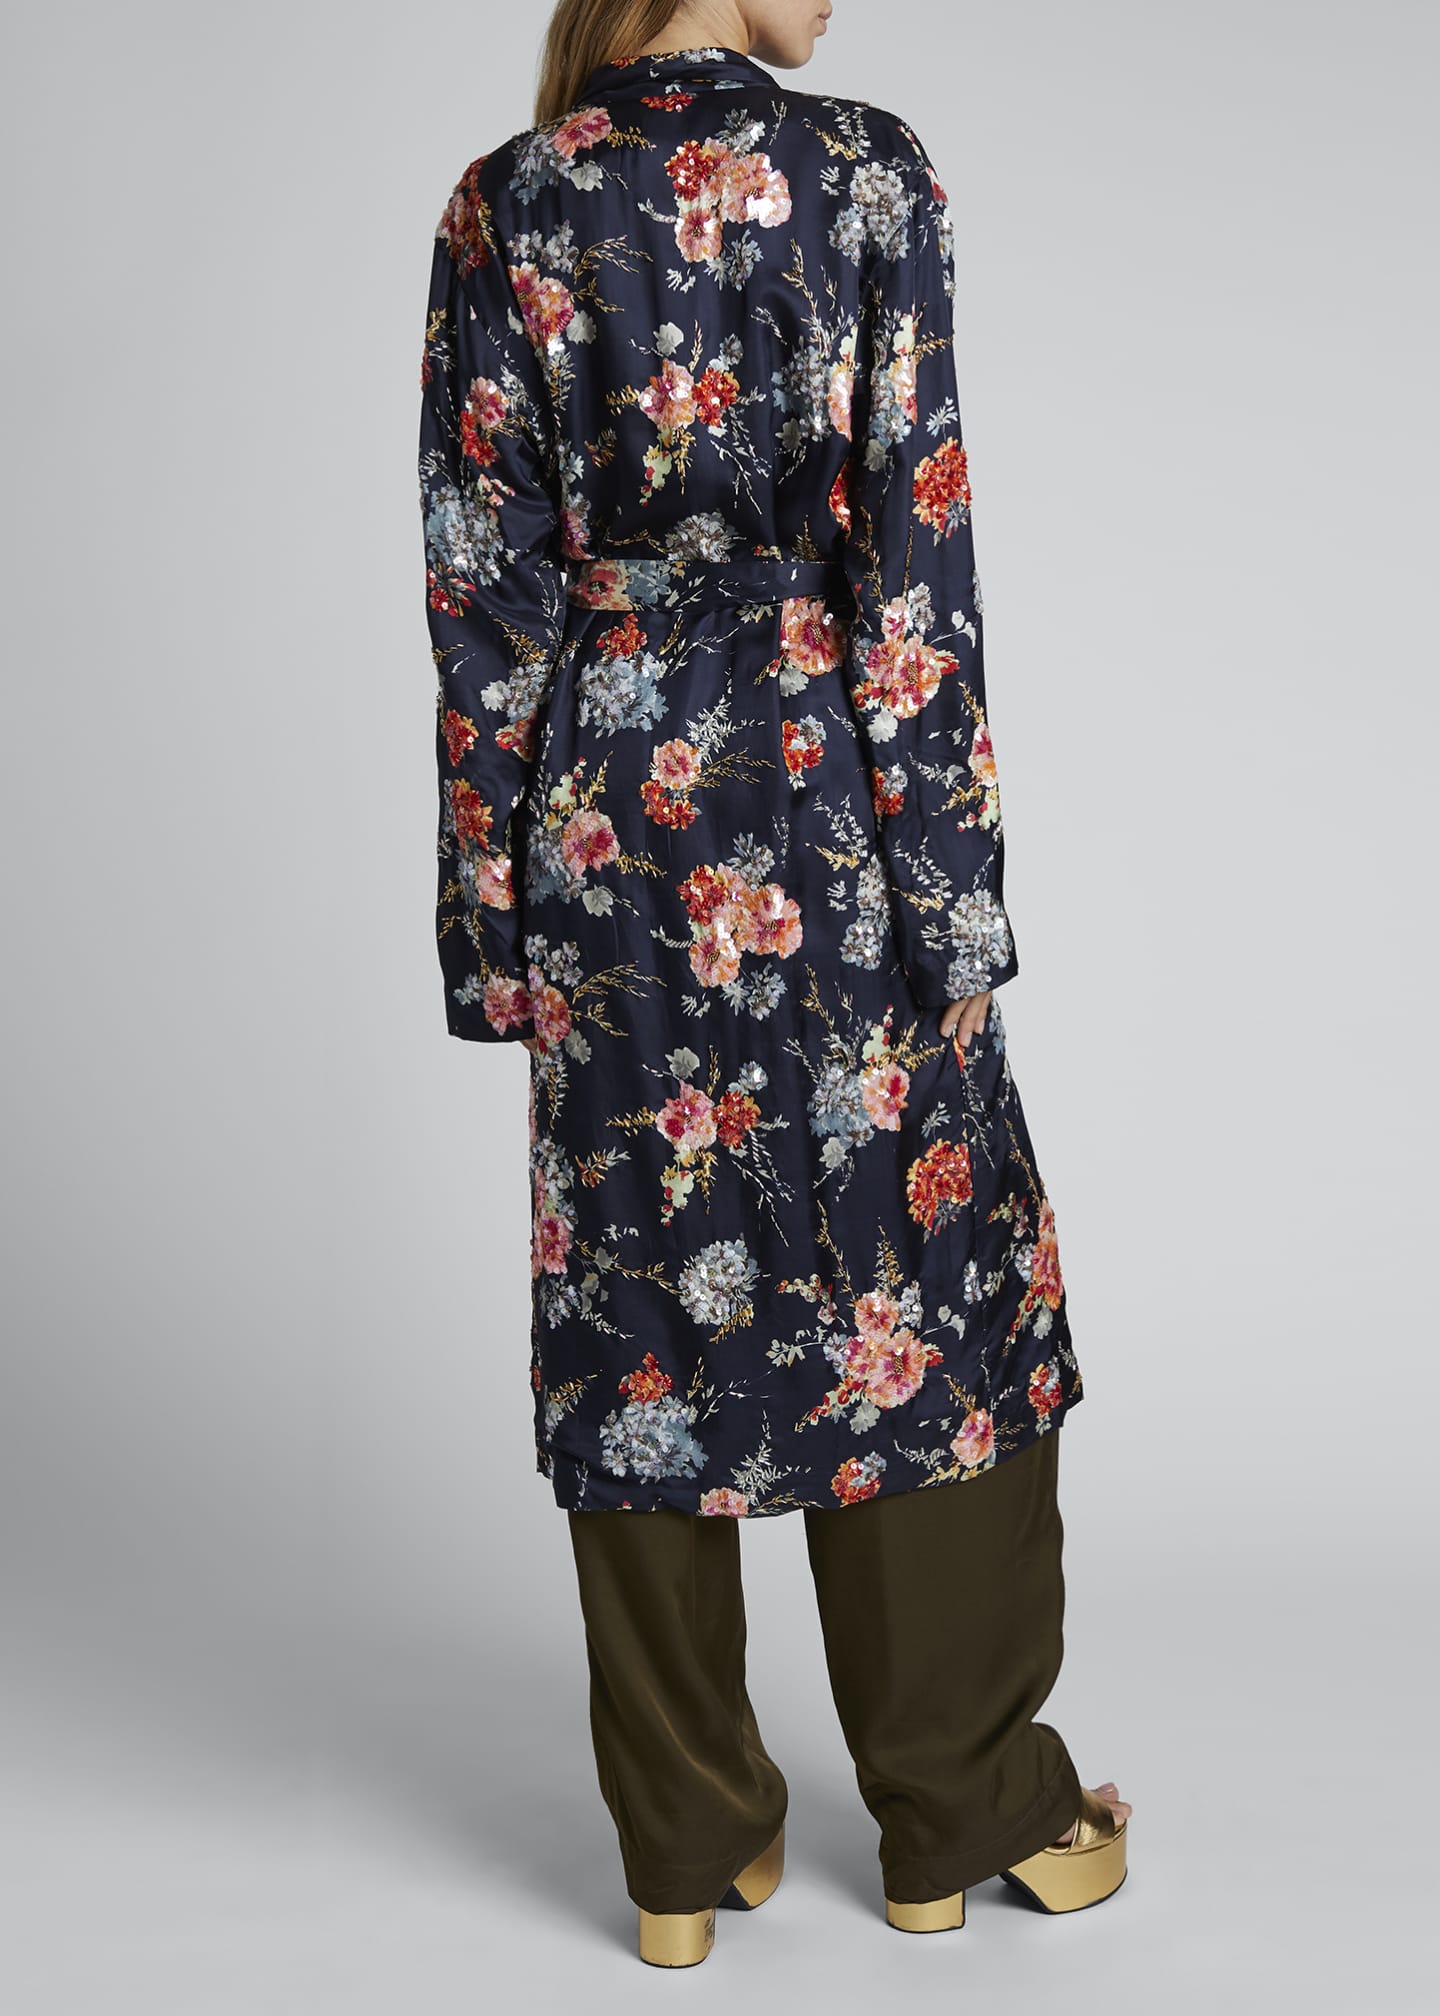 Dries Van Noten Charly Floral Tie-Front Robe Coat Image 2 of 3